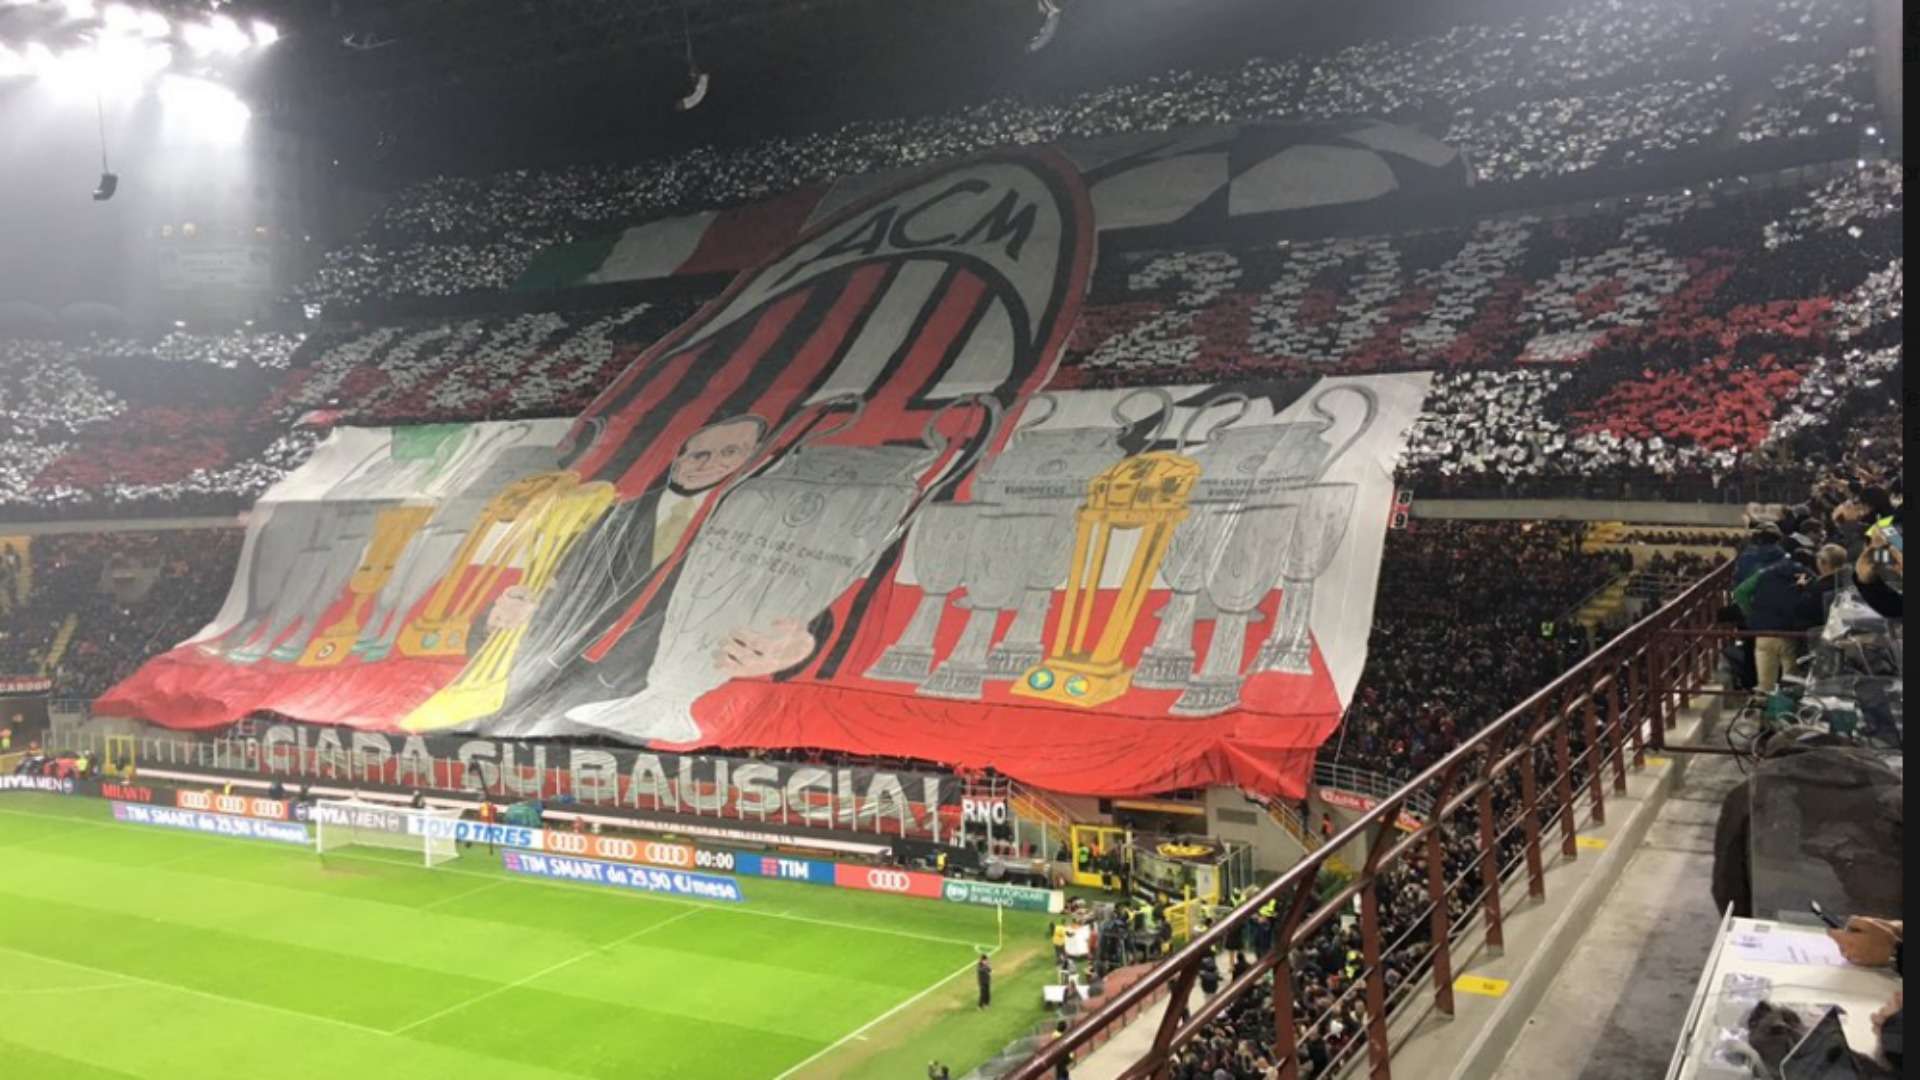 Berlusconi Milan fans